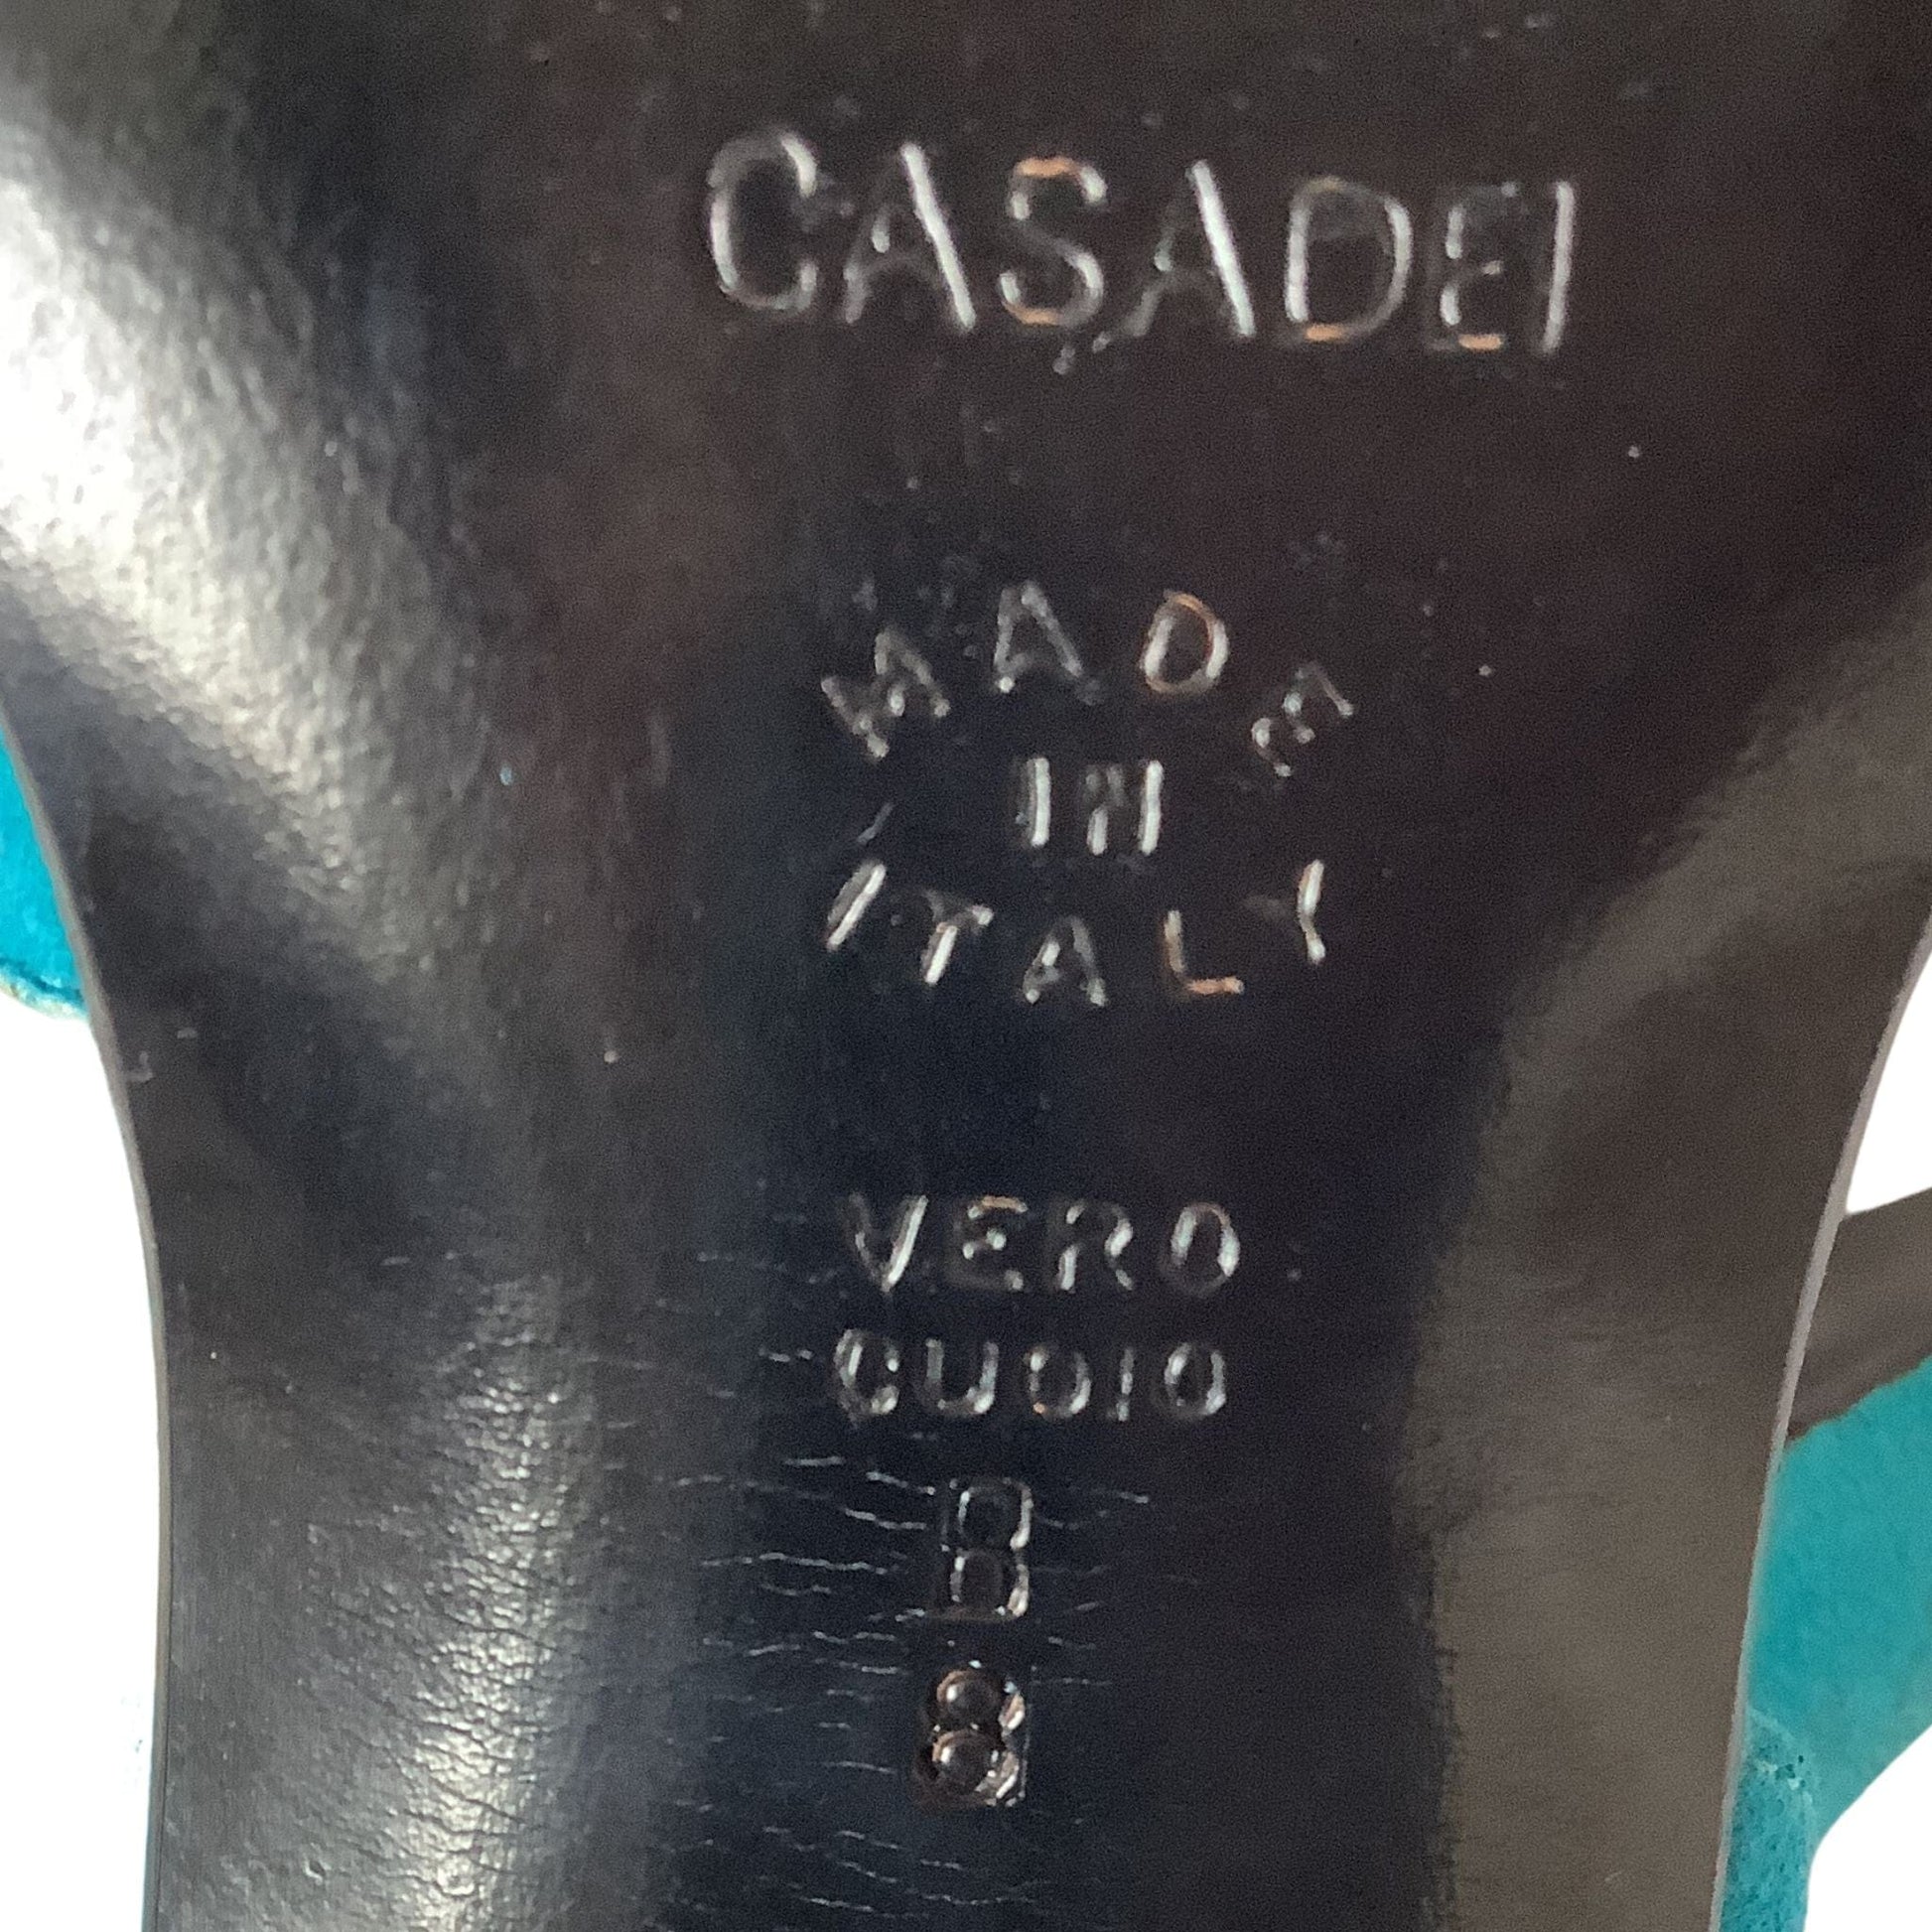 Casadei Teal Blue Heels 7.5 / Blue / Classic